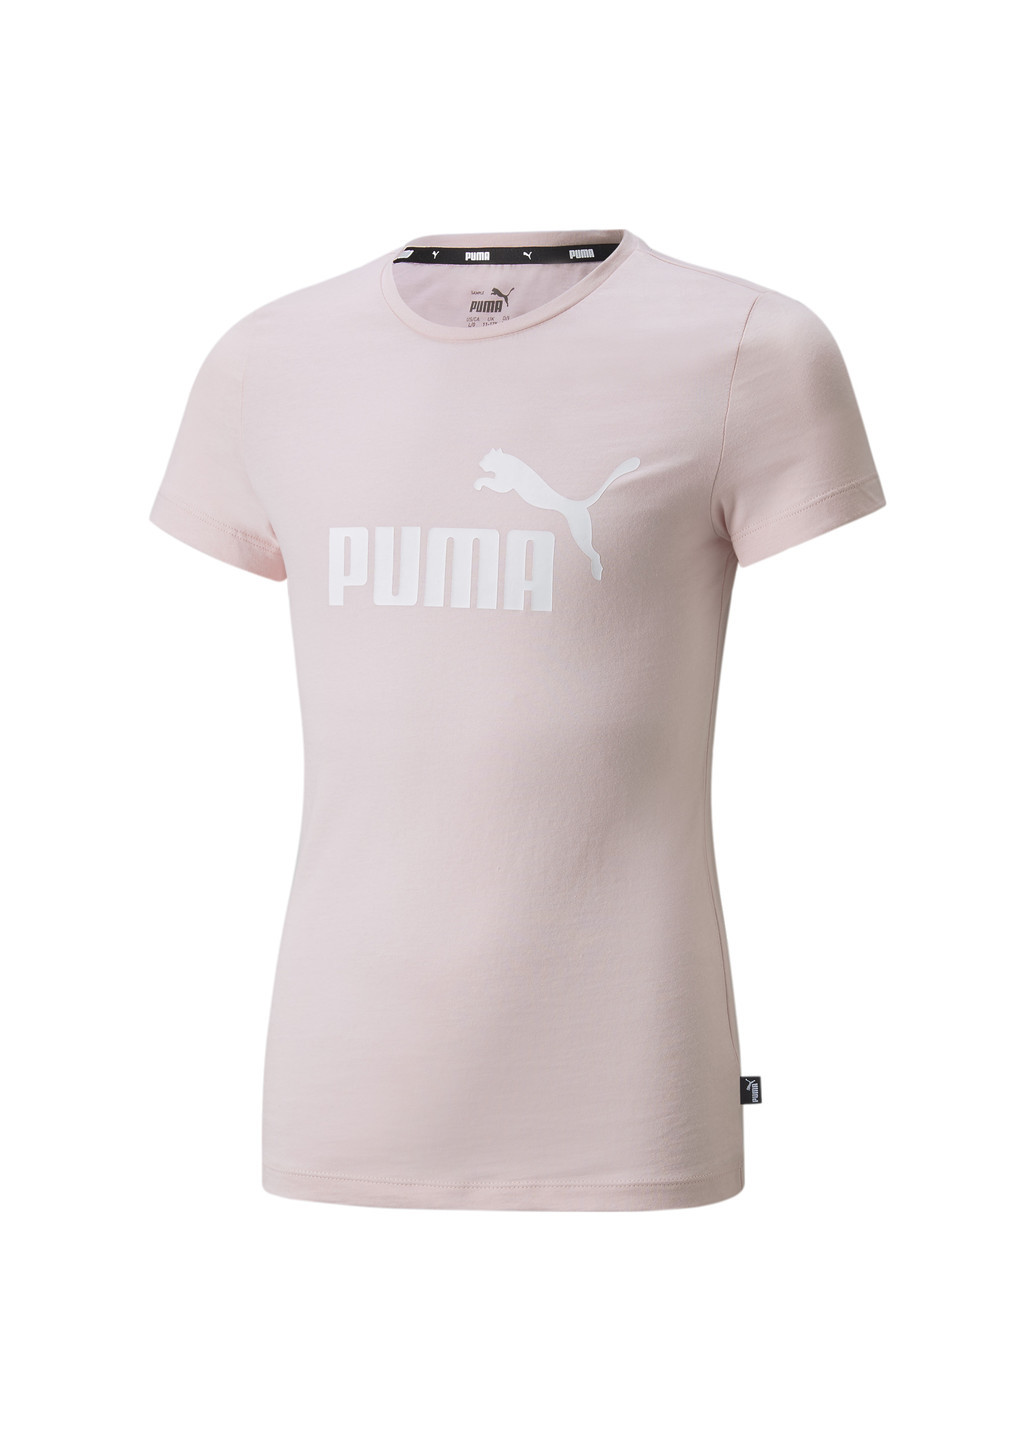 Дитяча футболка Essentials Logo Youth Tee Puma однотонна рожева спортивна бавовна